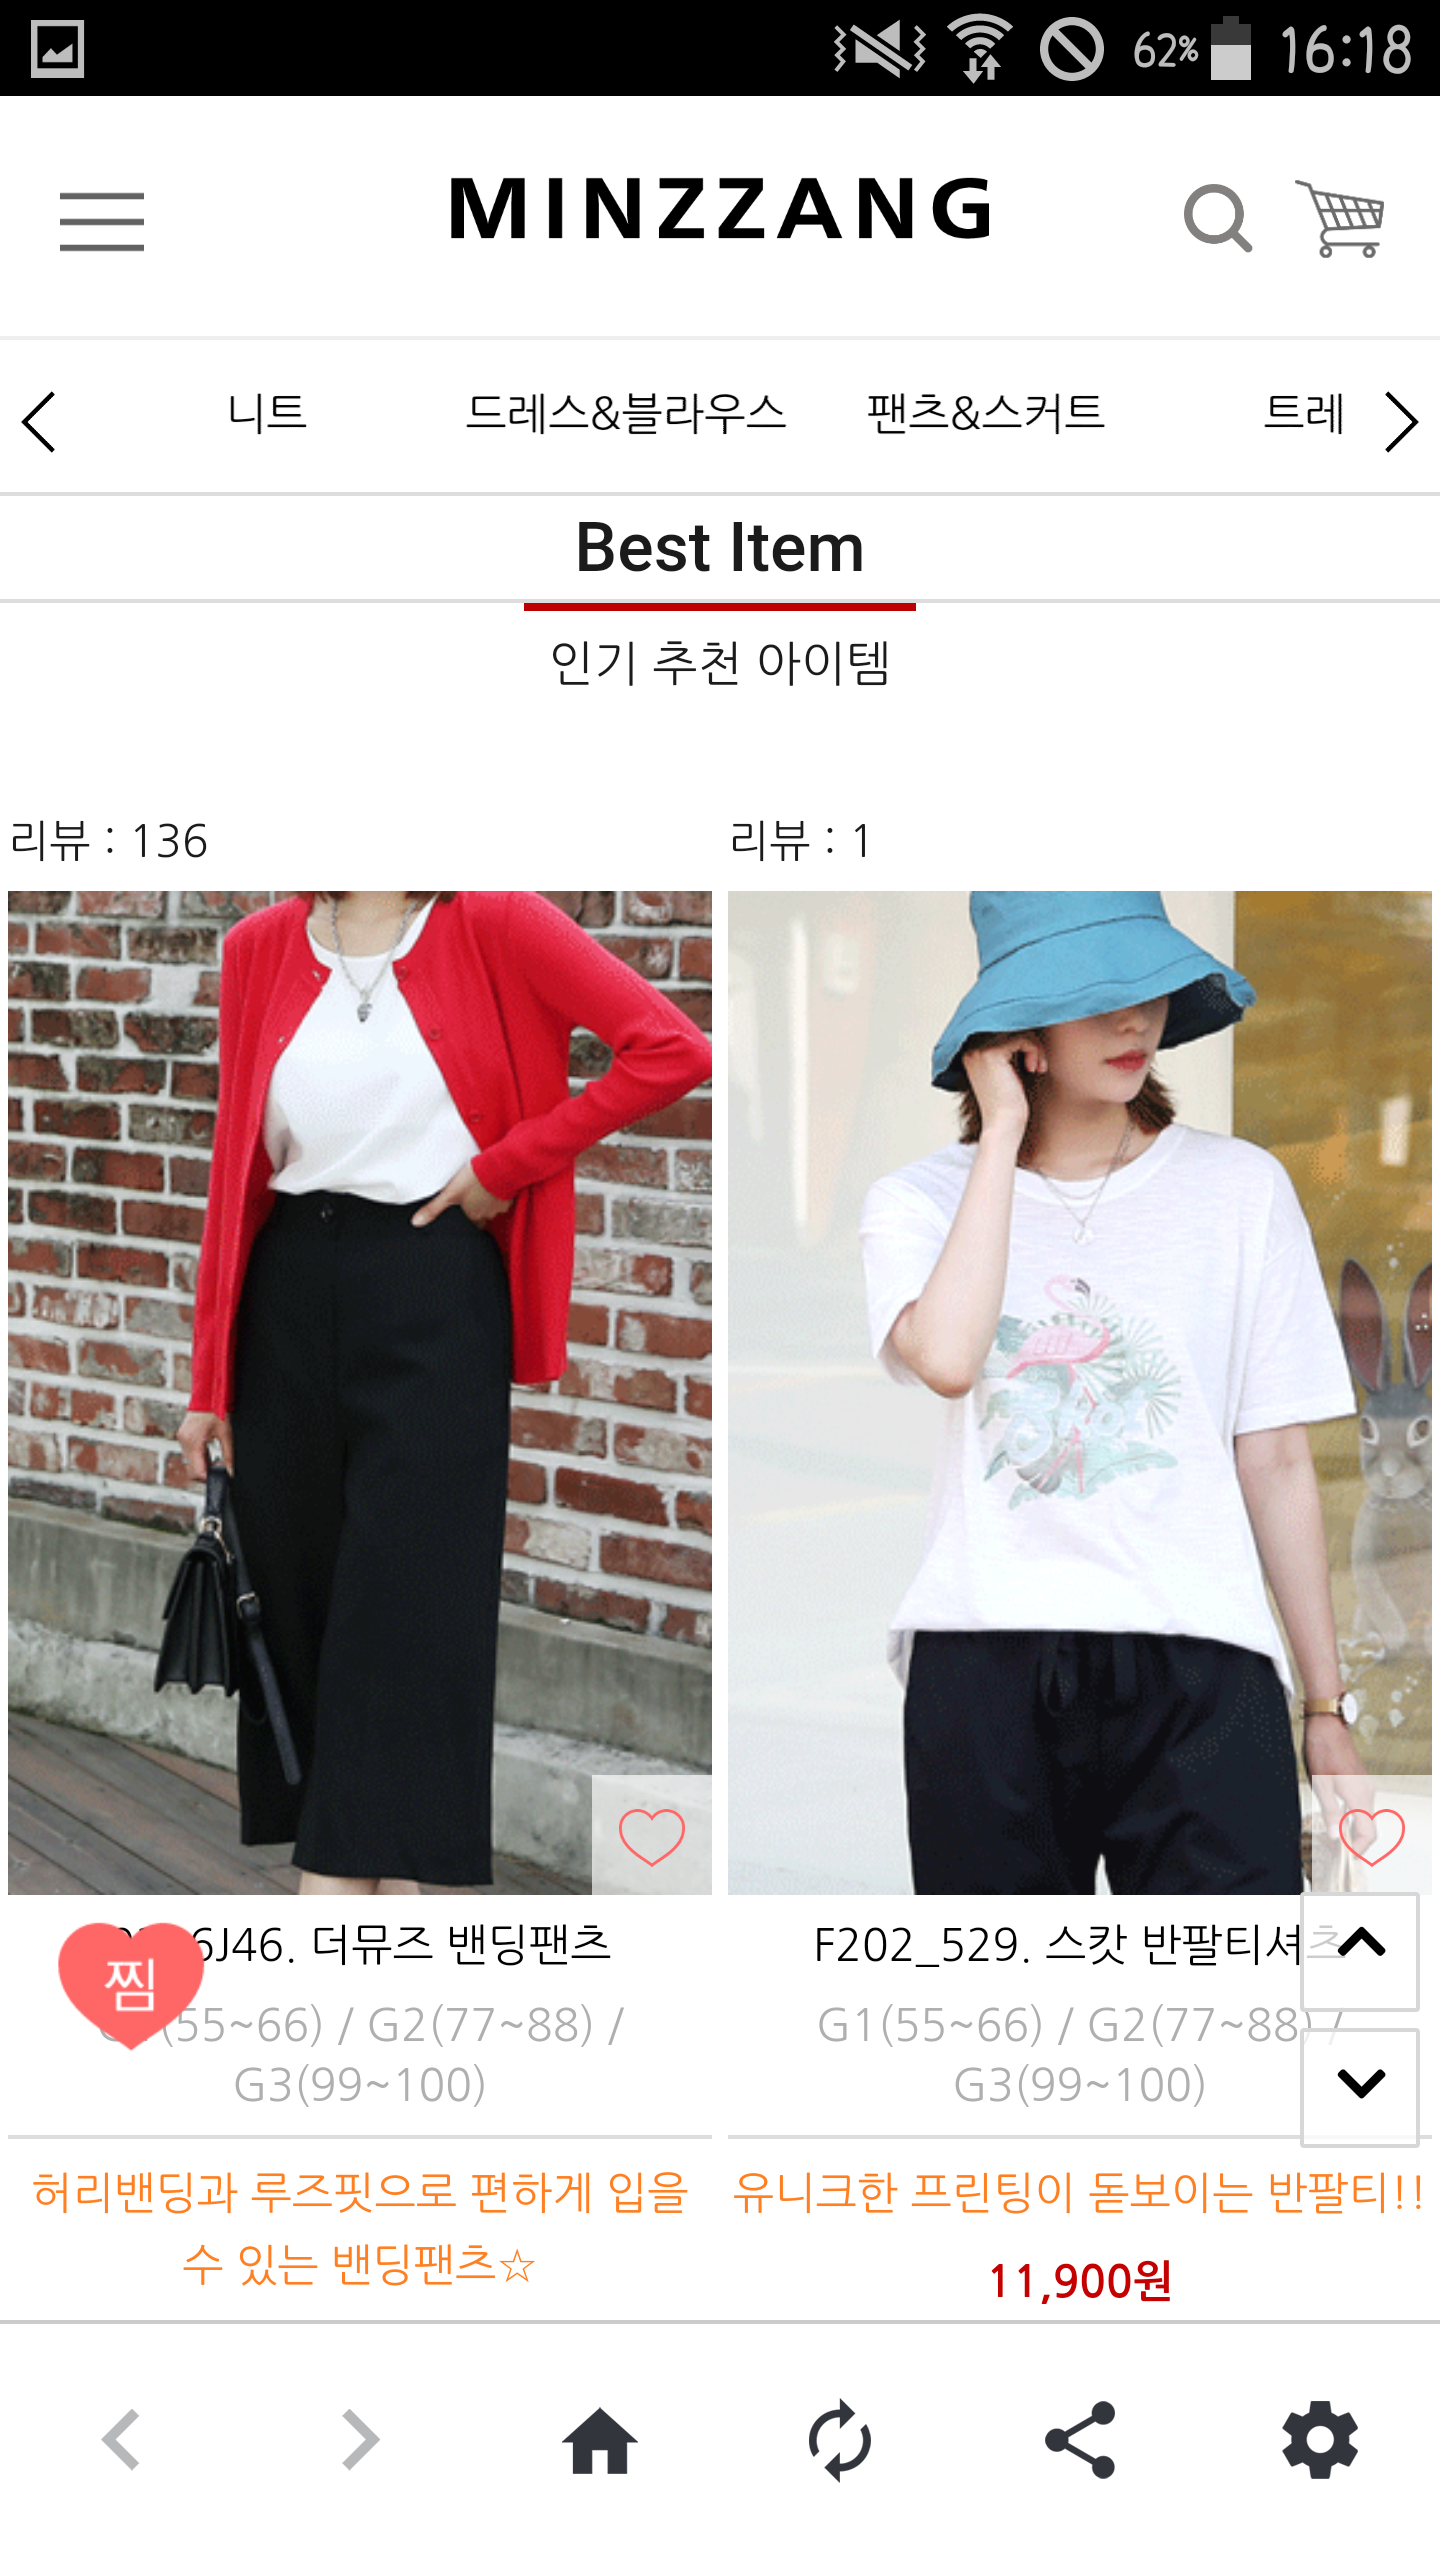 Android application 민짱나라 MinZzangNara screenshort